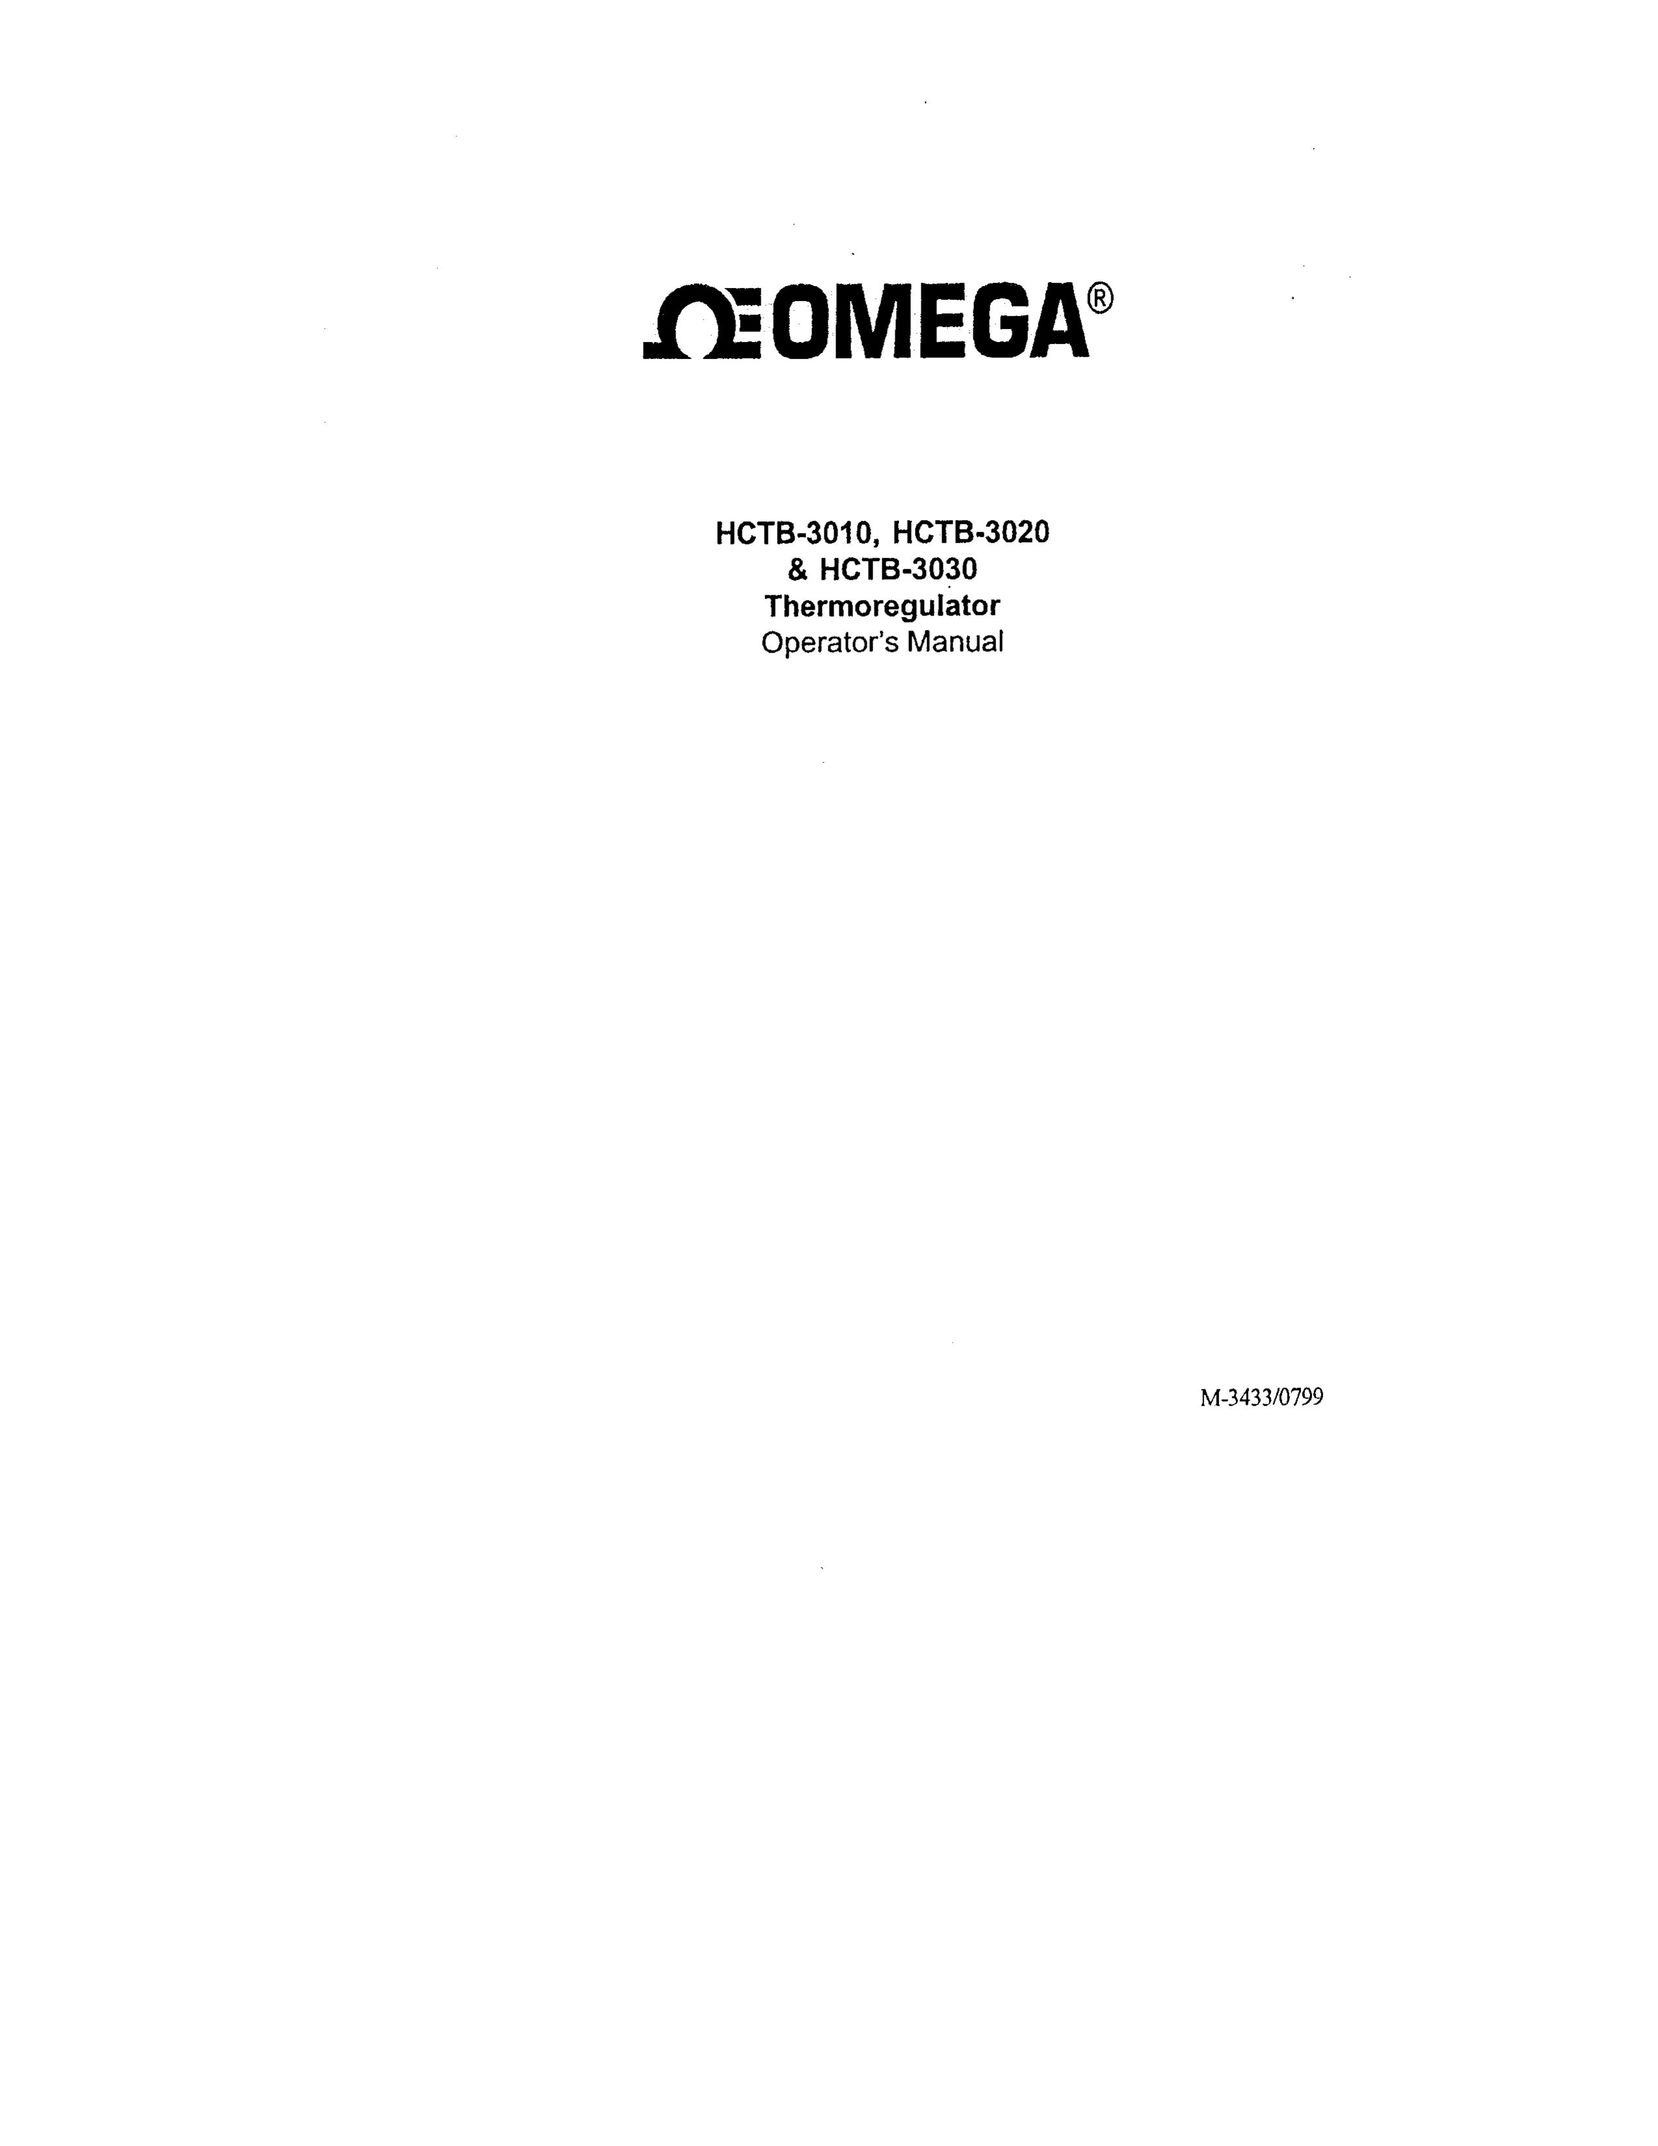 Omega HCTB-3020 Thermostat User Manual